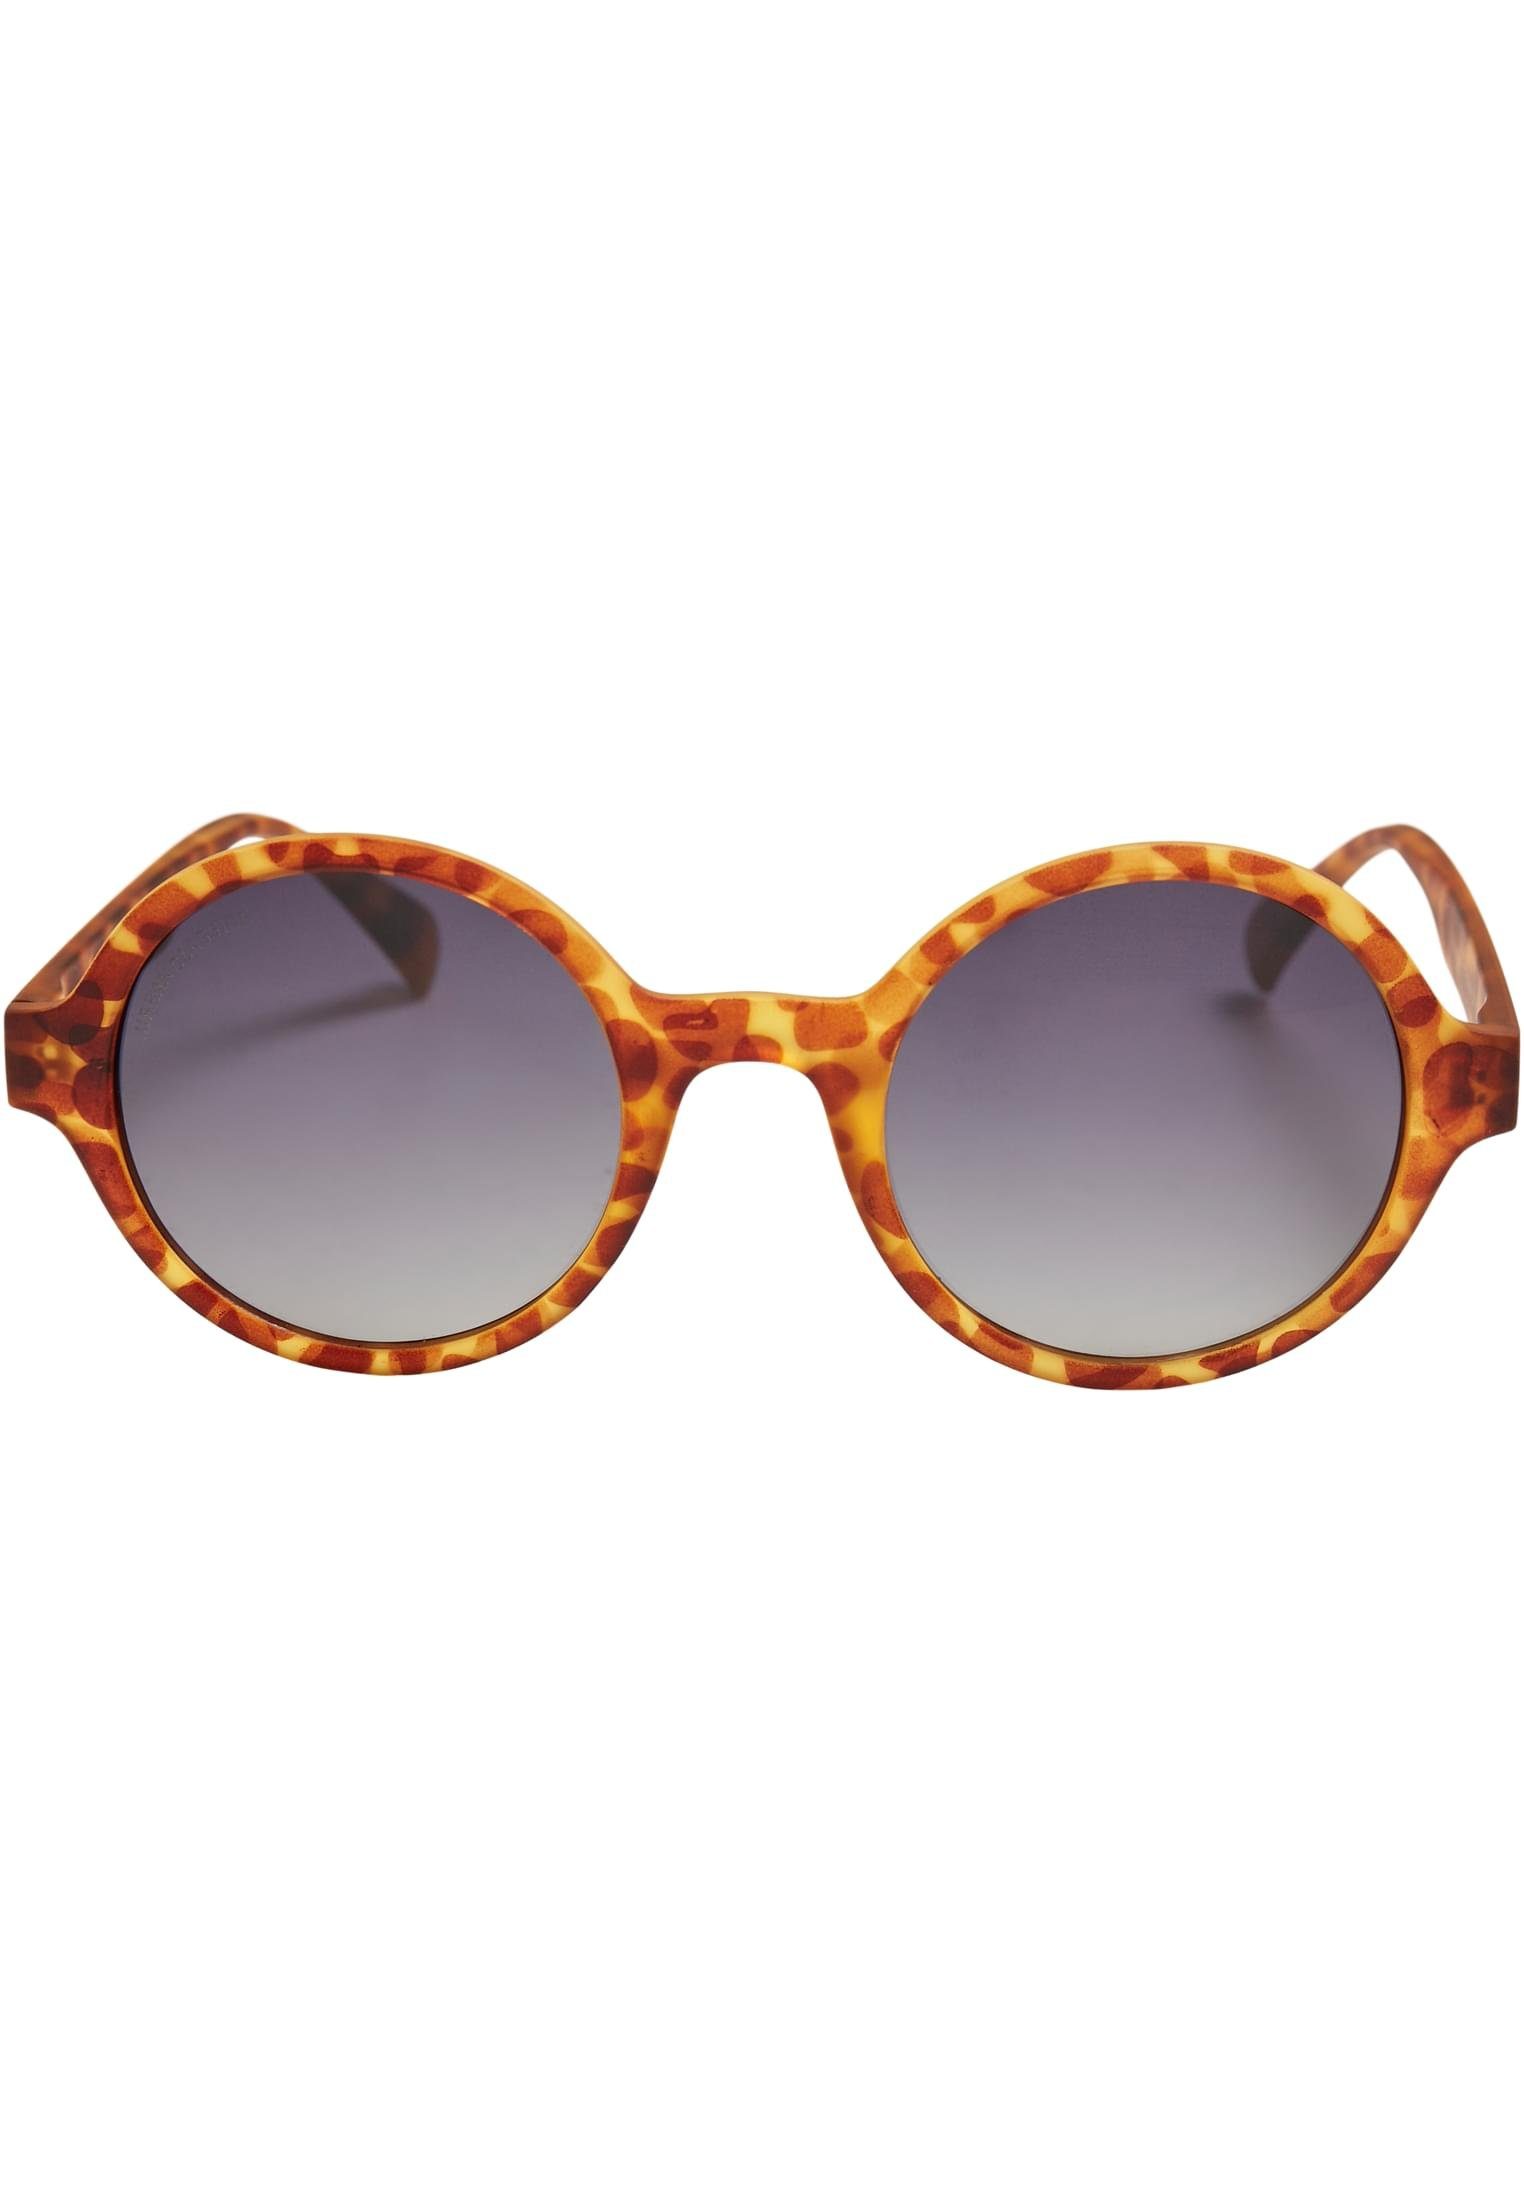 Sonnenbrille UC Retro brown URBAN Accessoires leo/grey Sunglasses CLASSICS Funk